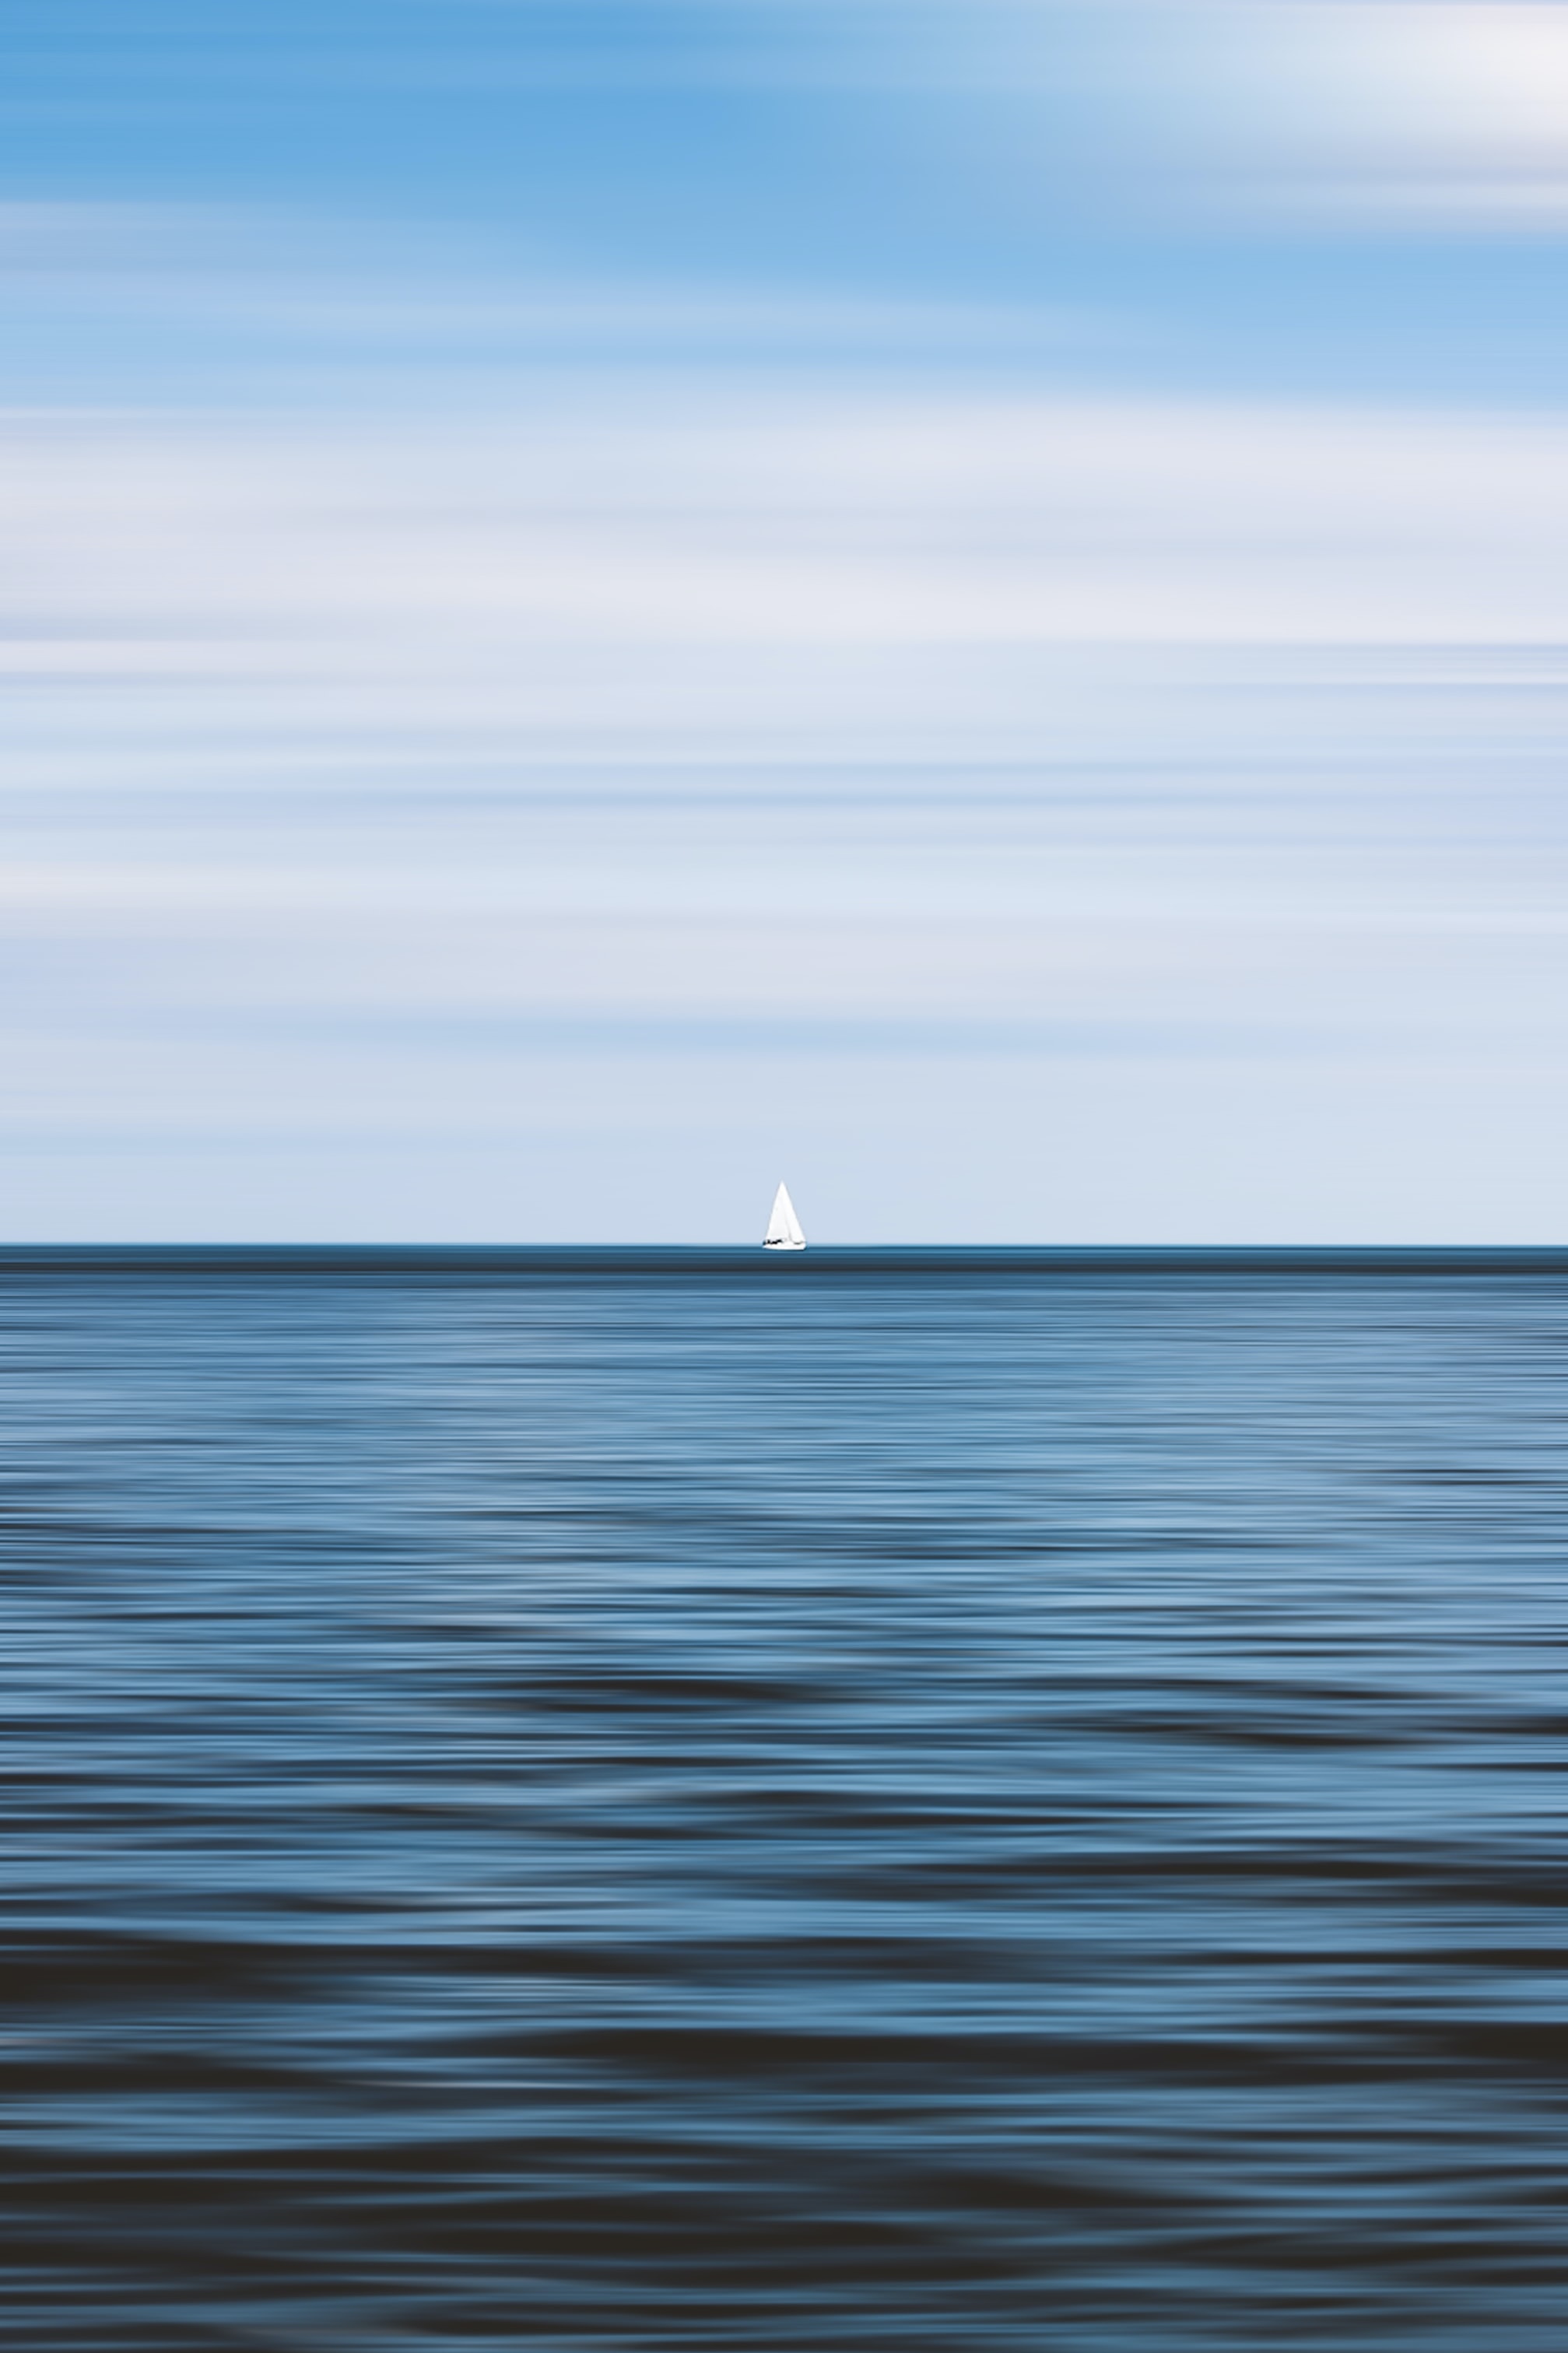 Widescreen image horizon, waves, sky, sailfish